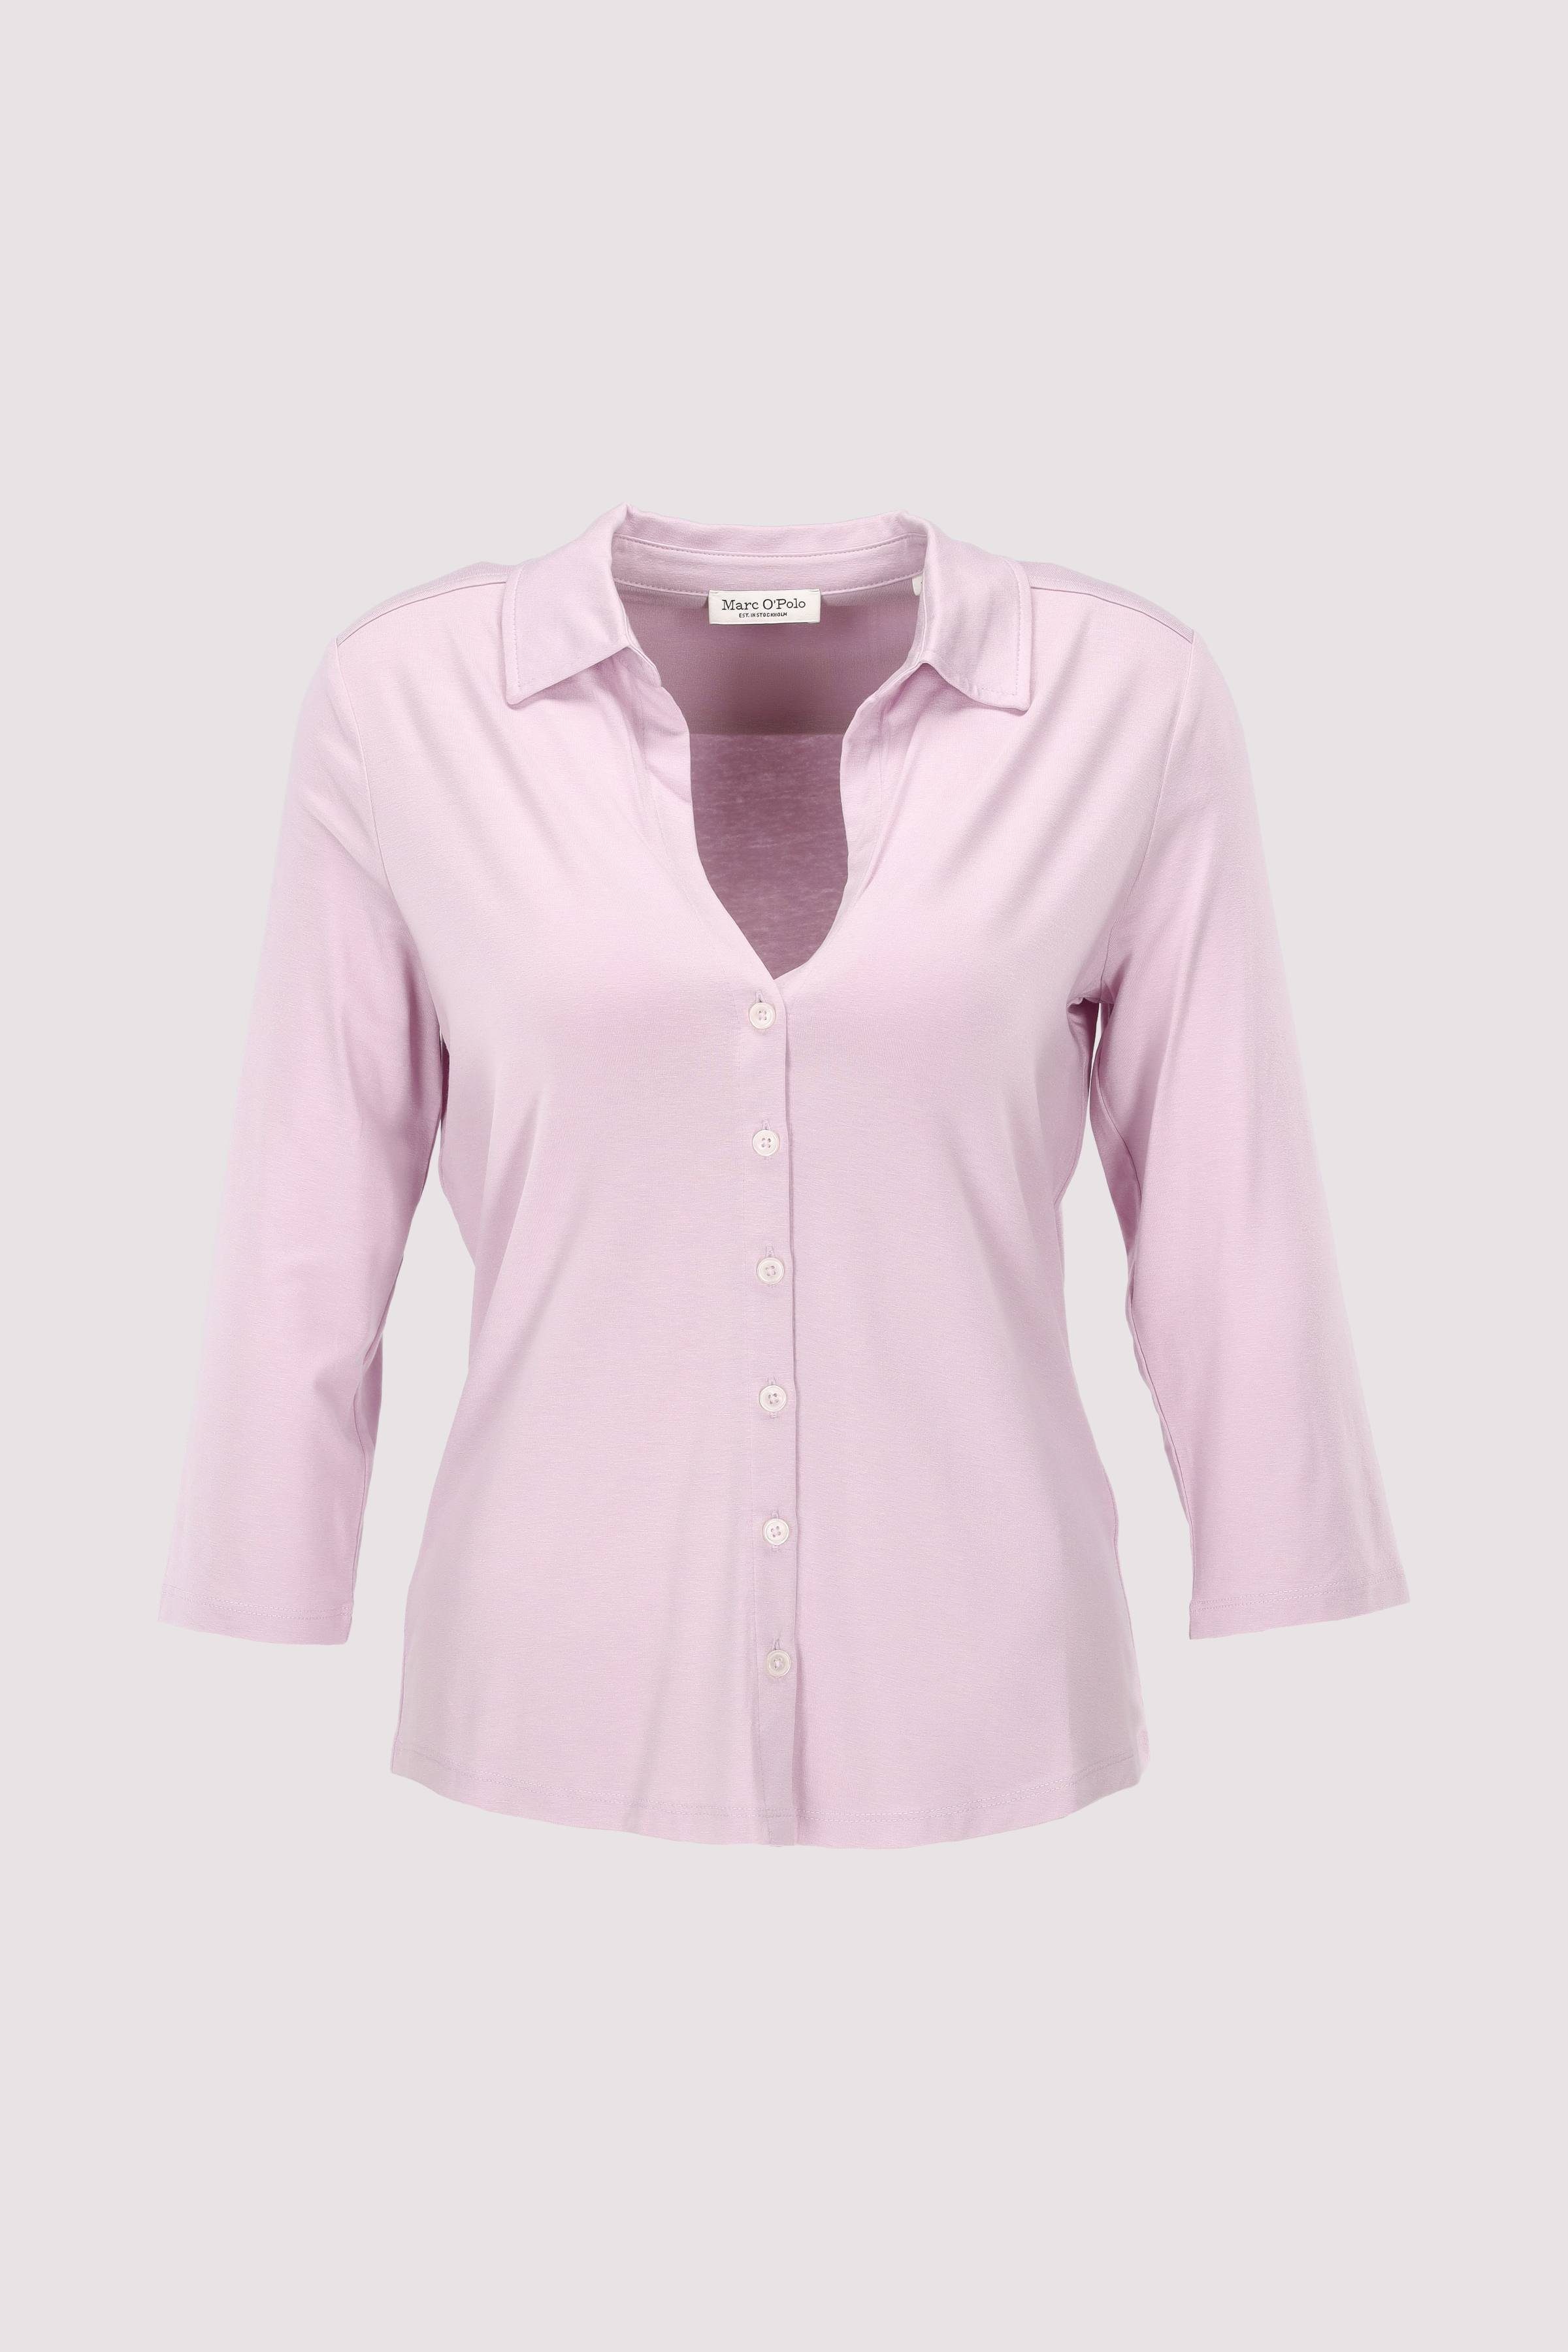 Jersey blouse, 3 4 sleeve, cla